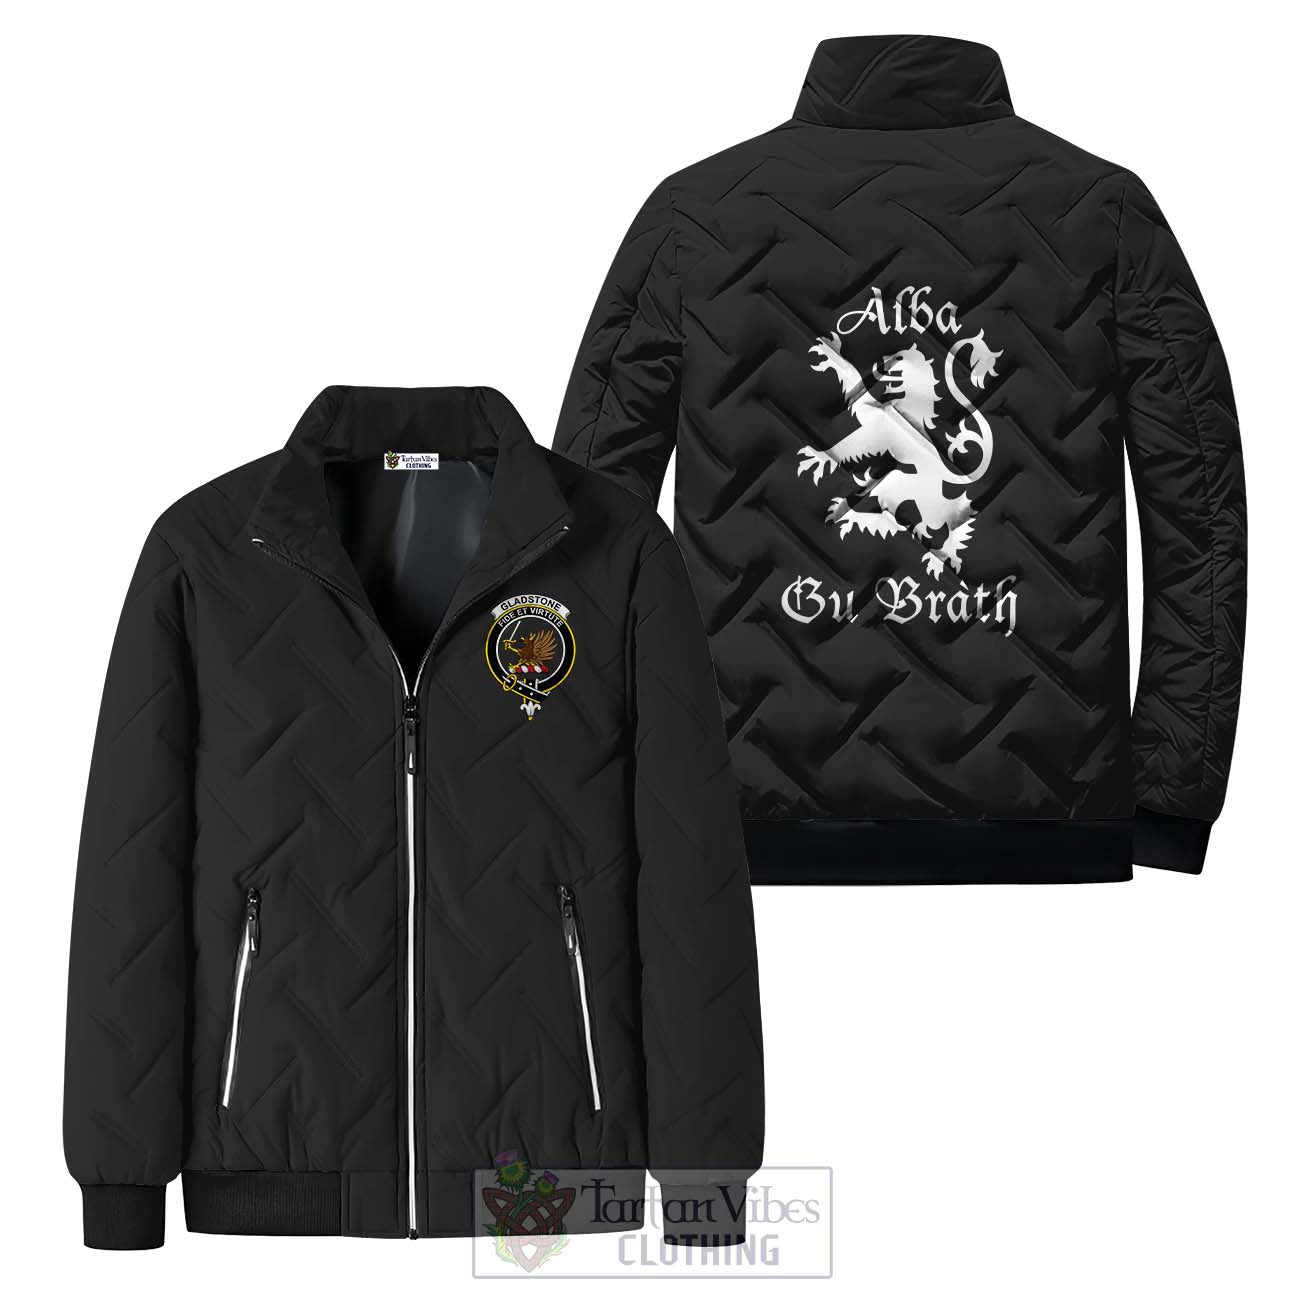 Tartan Vibes Clothing Gladstone Family Crest Padded Cotton Jacket Lion Rampant Alba Gu Brath Style